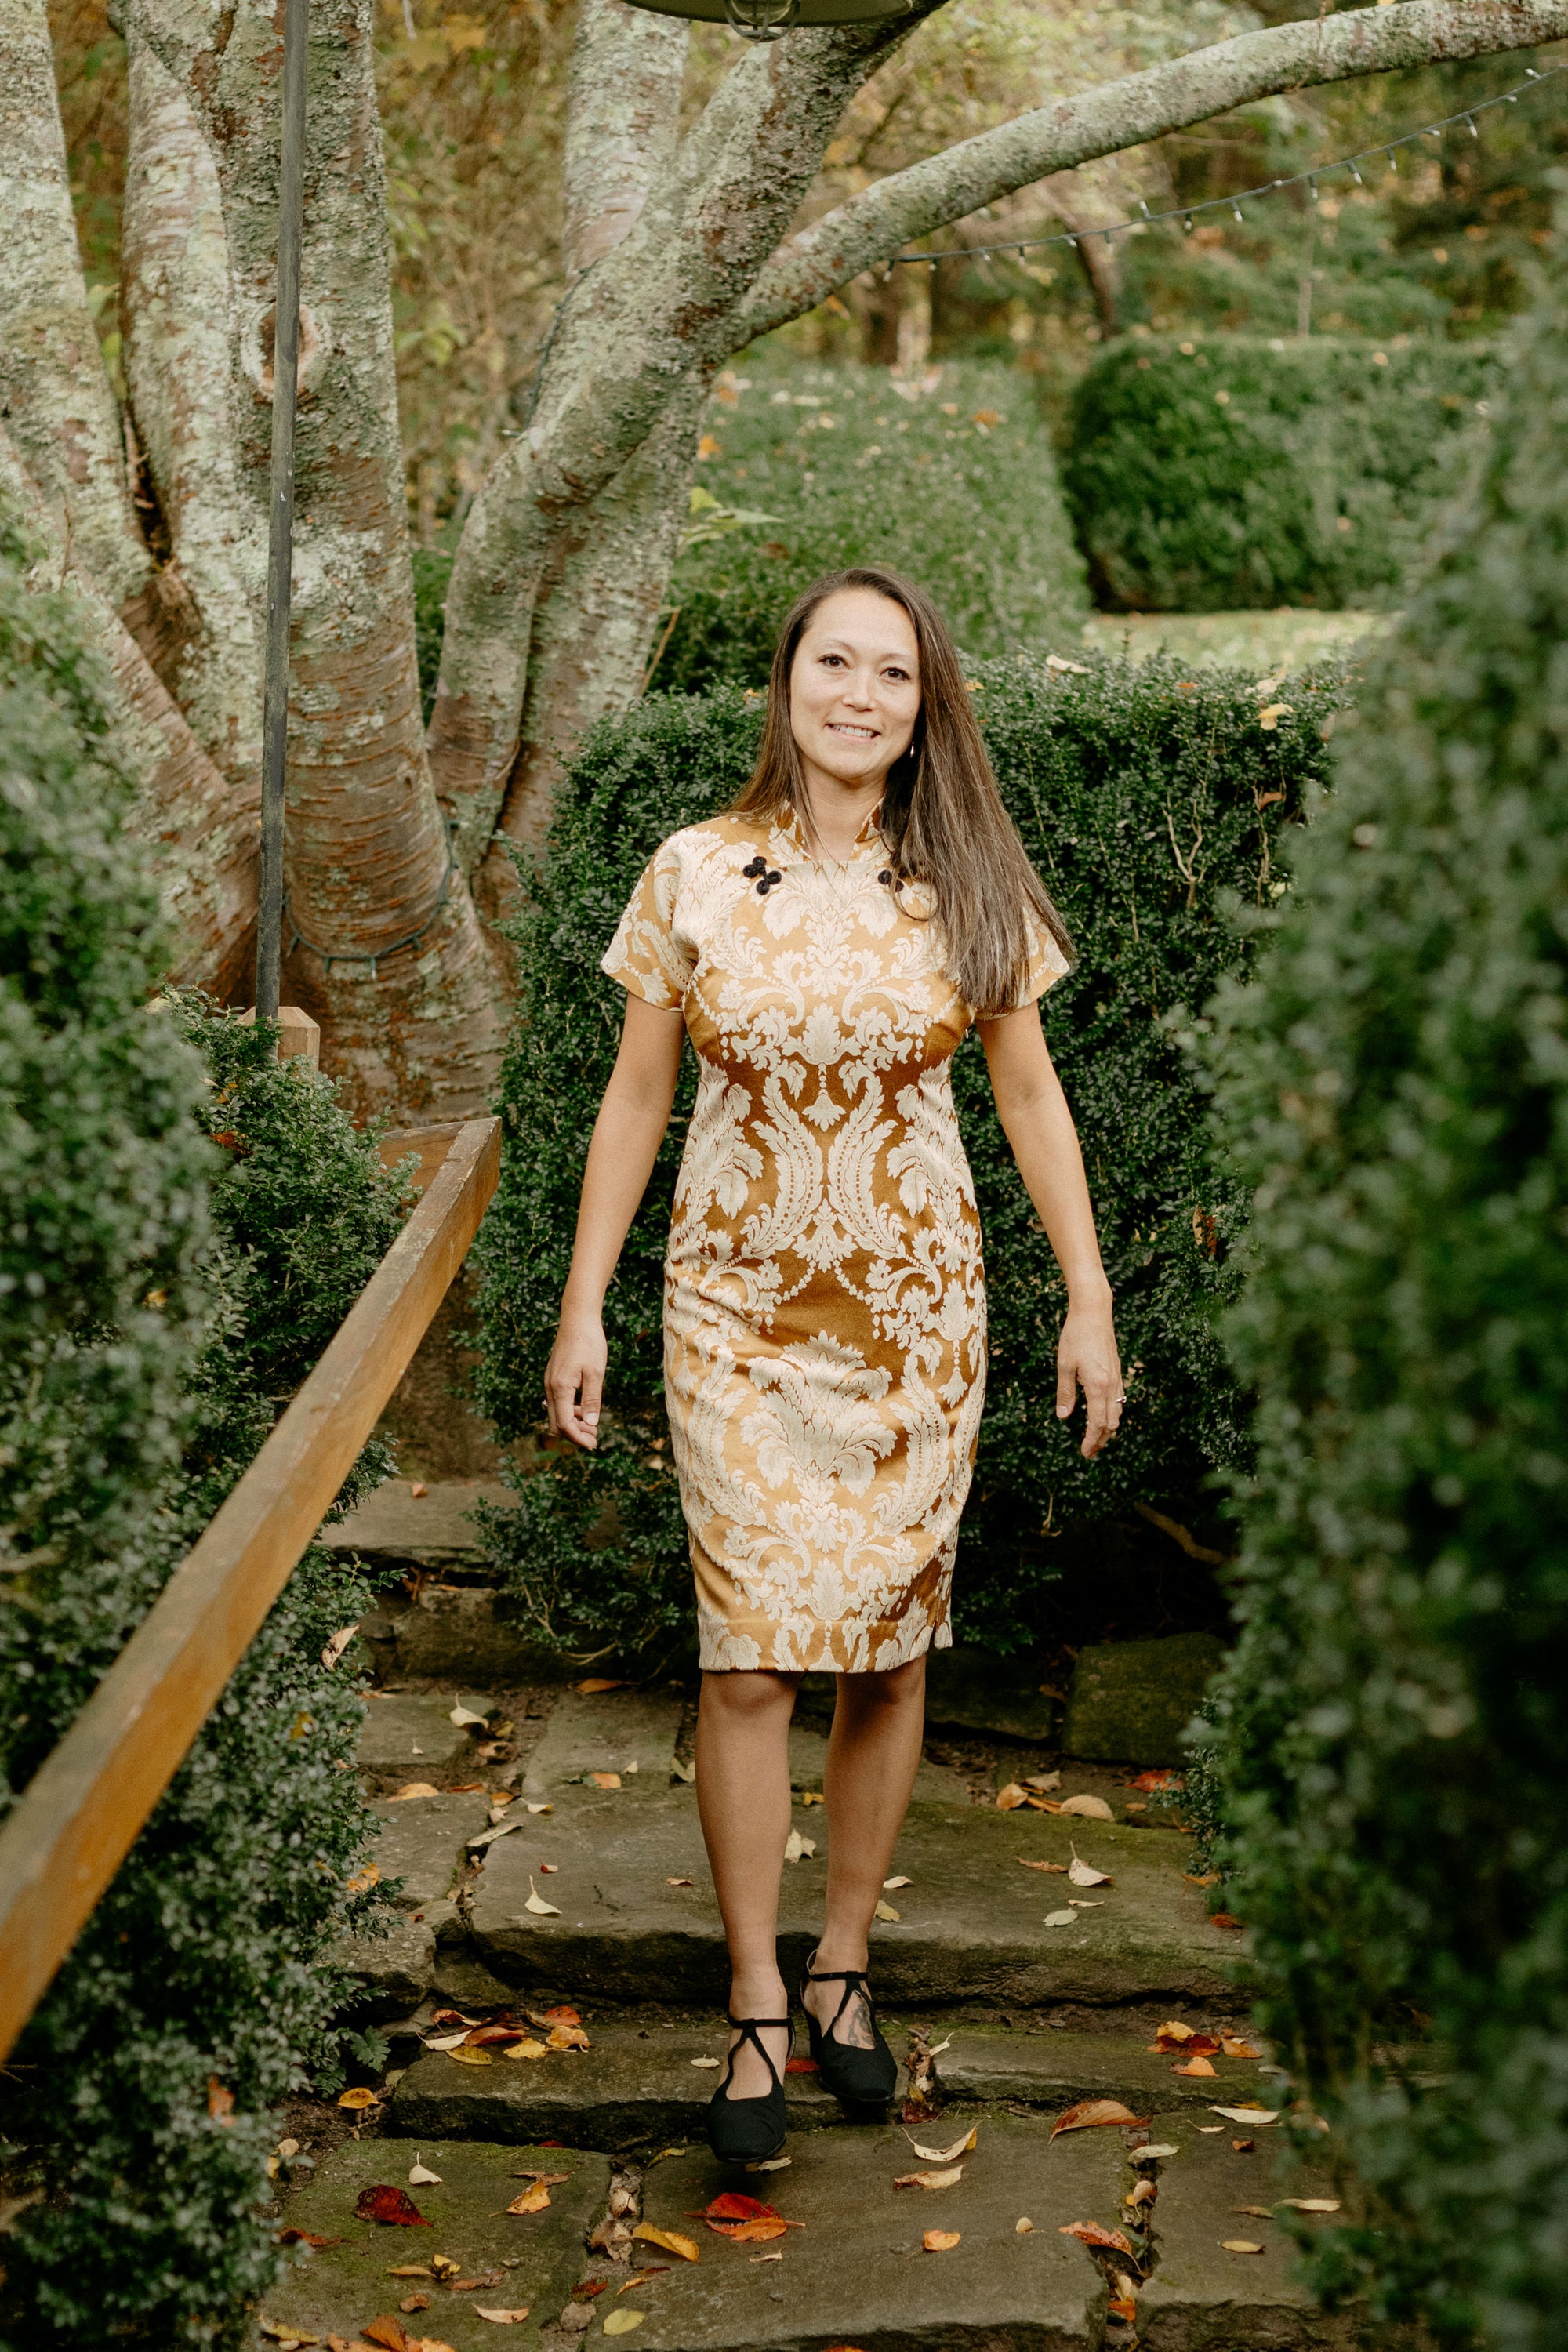 Woman walking down stone steps by shrubs wearing a knee-length gold brocade cheongsam.